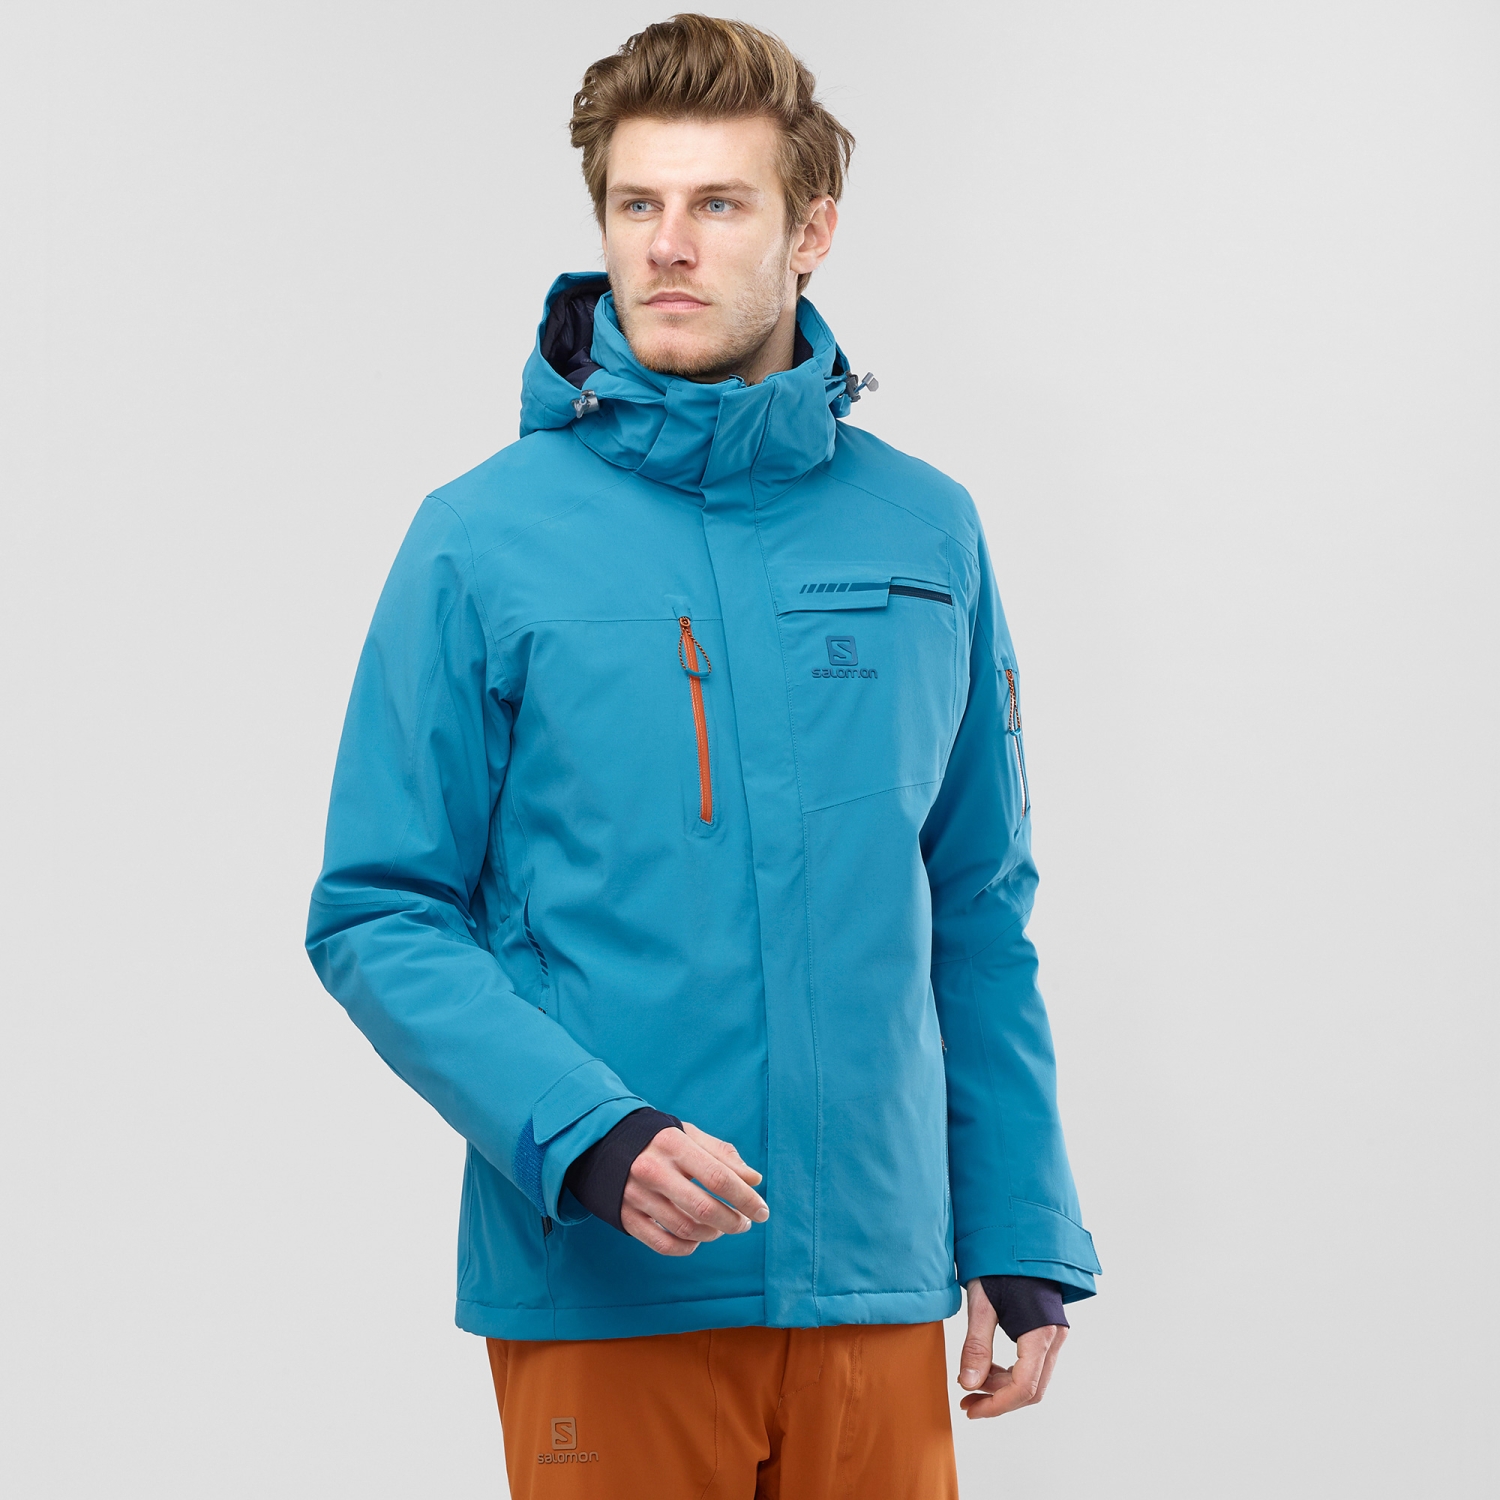 Salomon Brilliant Fjord Blue Snow Jacket 2020 - Tallington Lakes